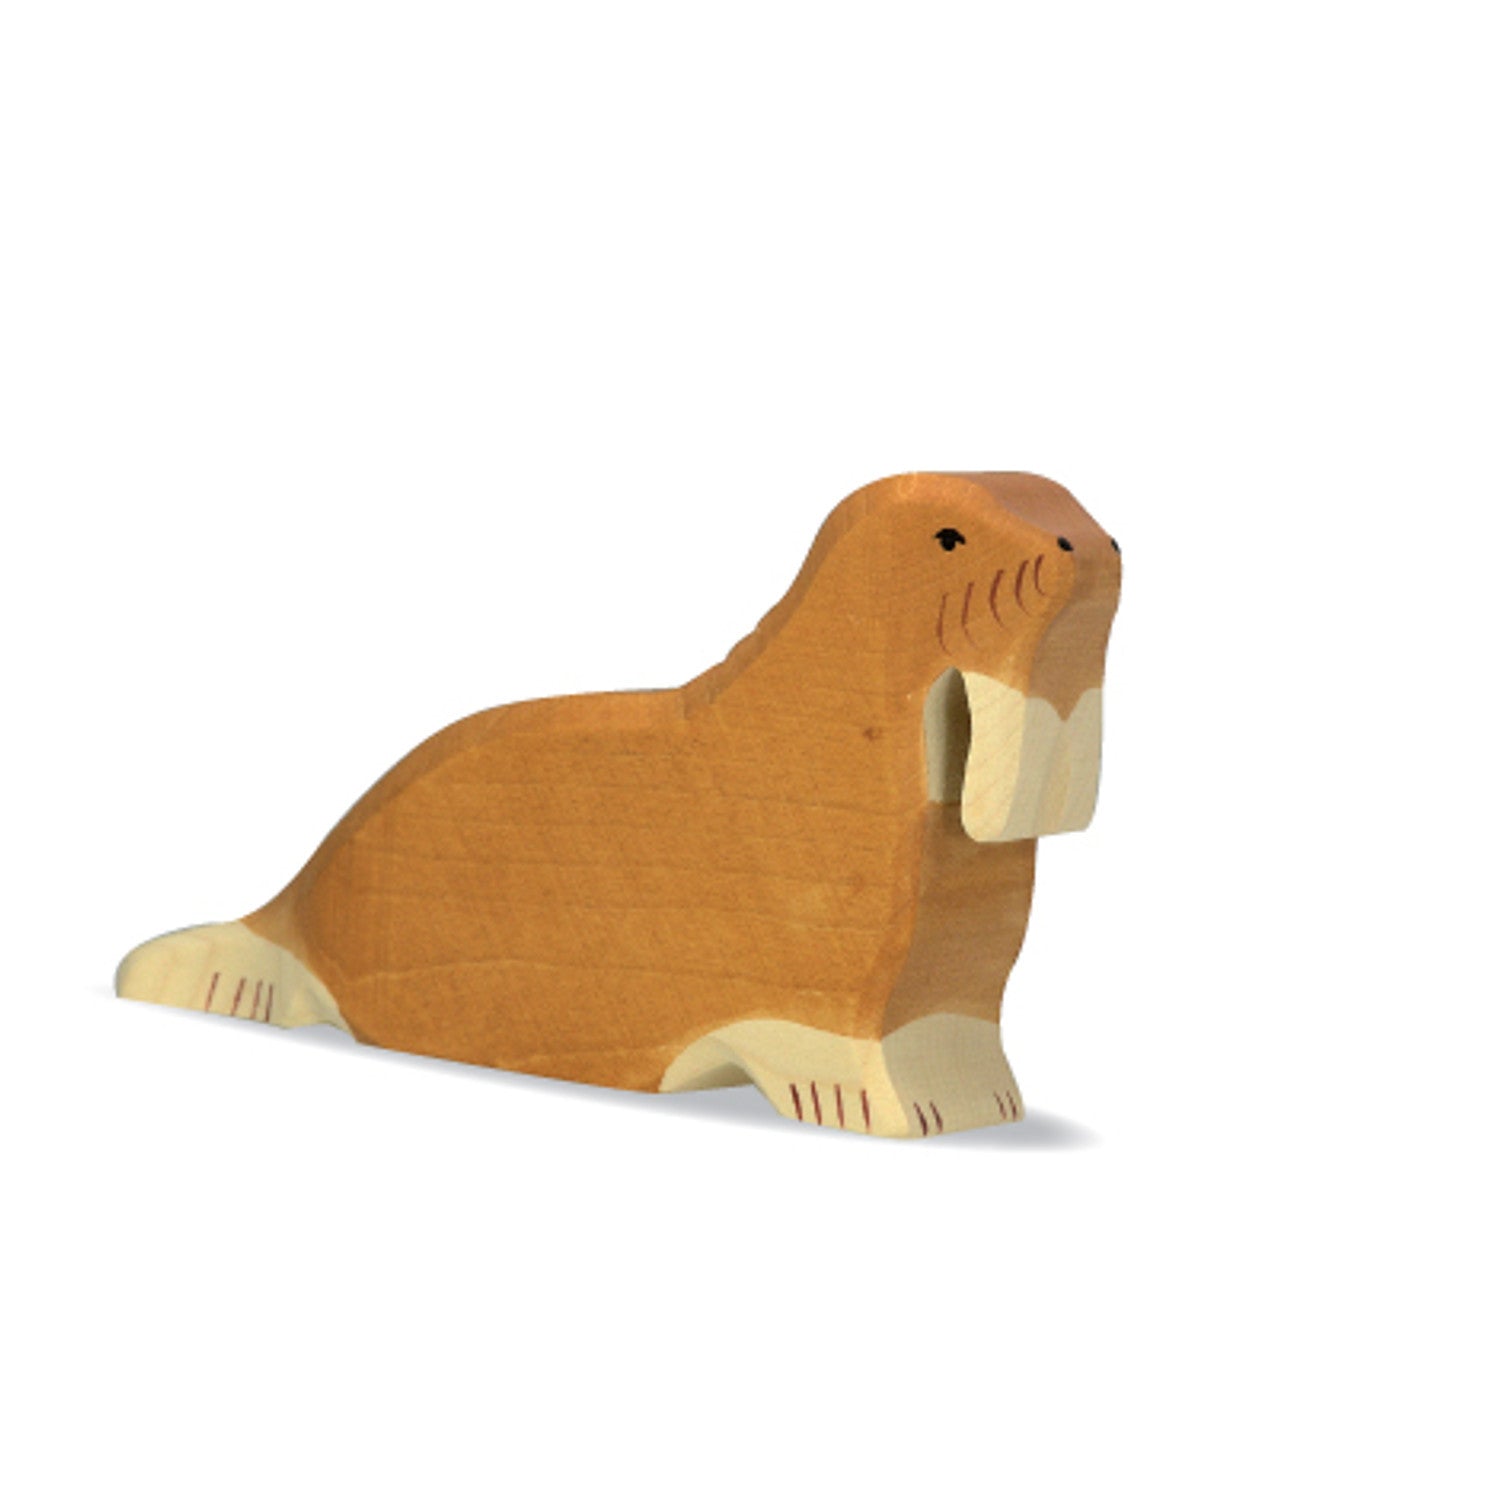 Holztiger wooden hand carved walrus figurine imaginative play